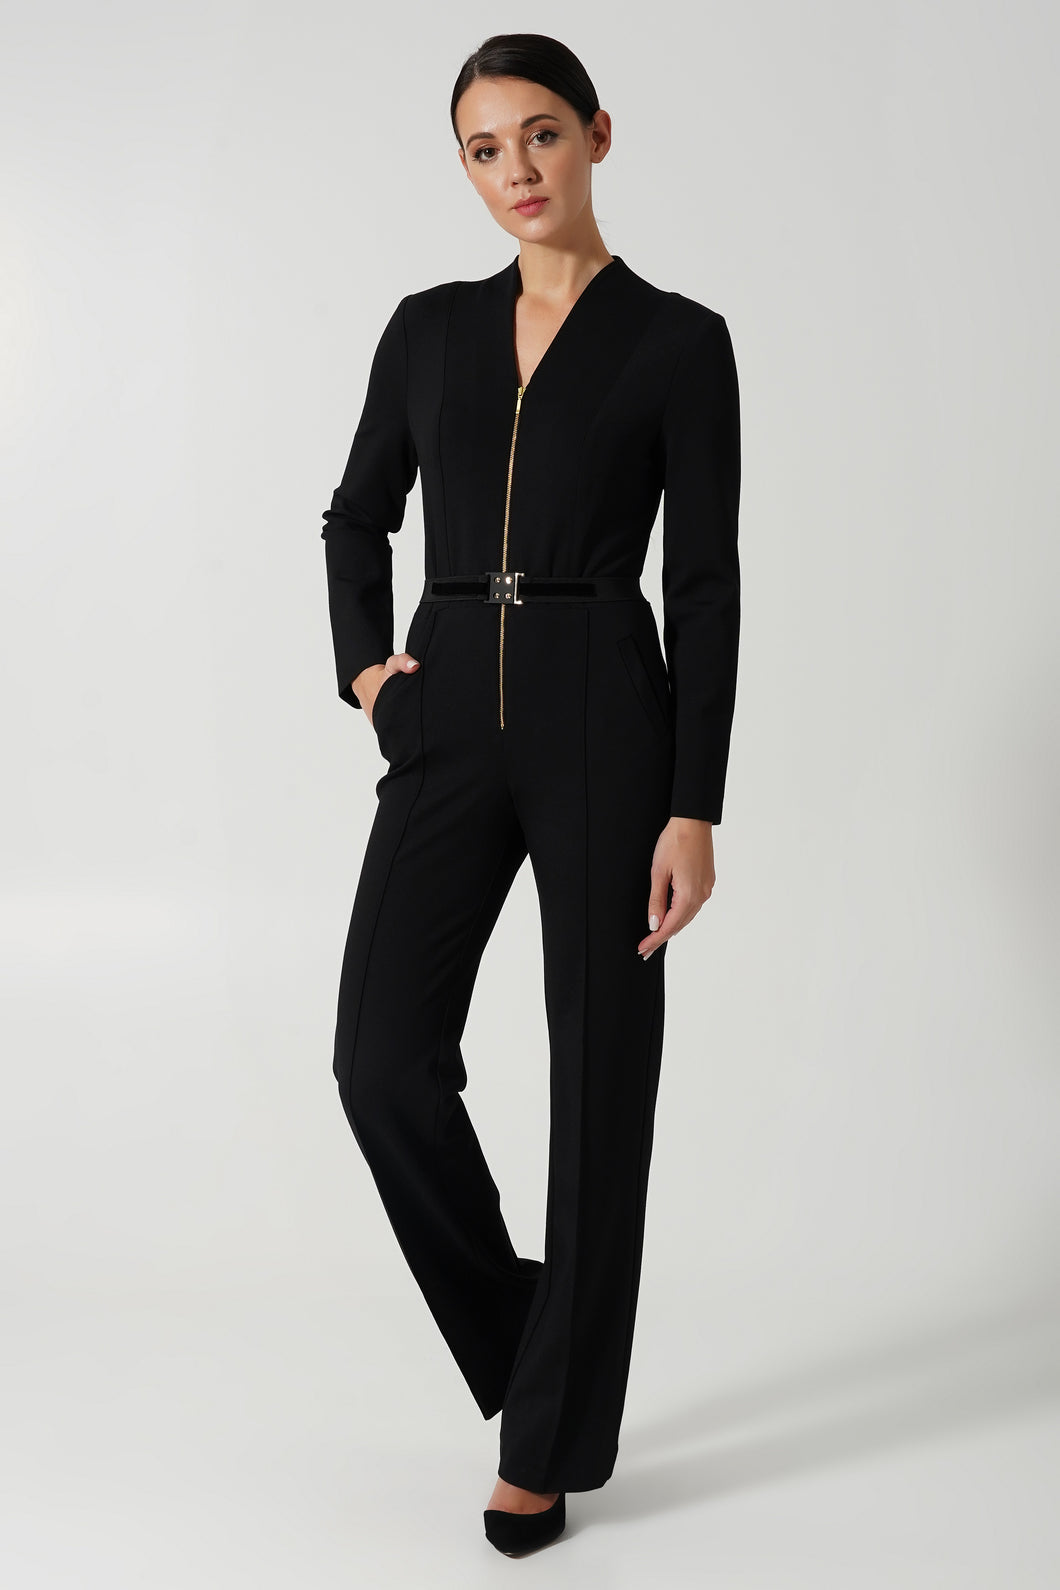 Black formal straight leg blazer jumpsuit